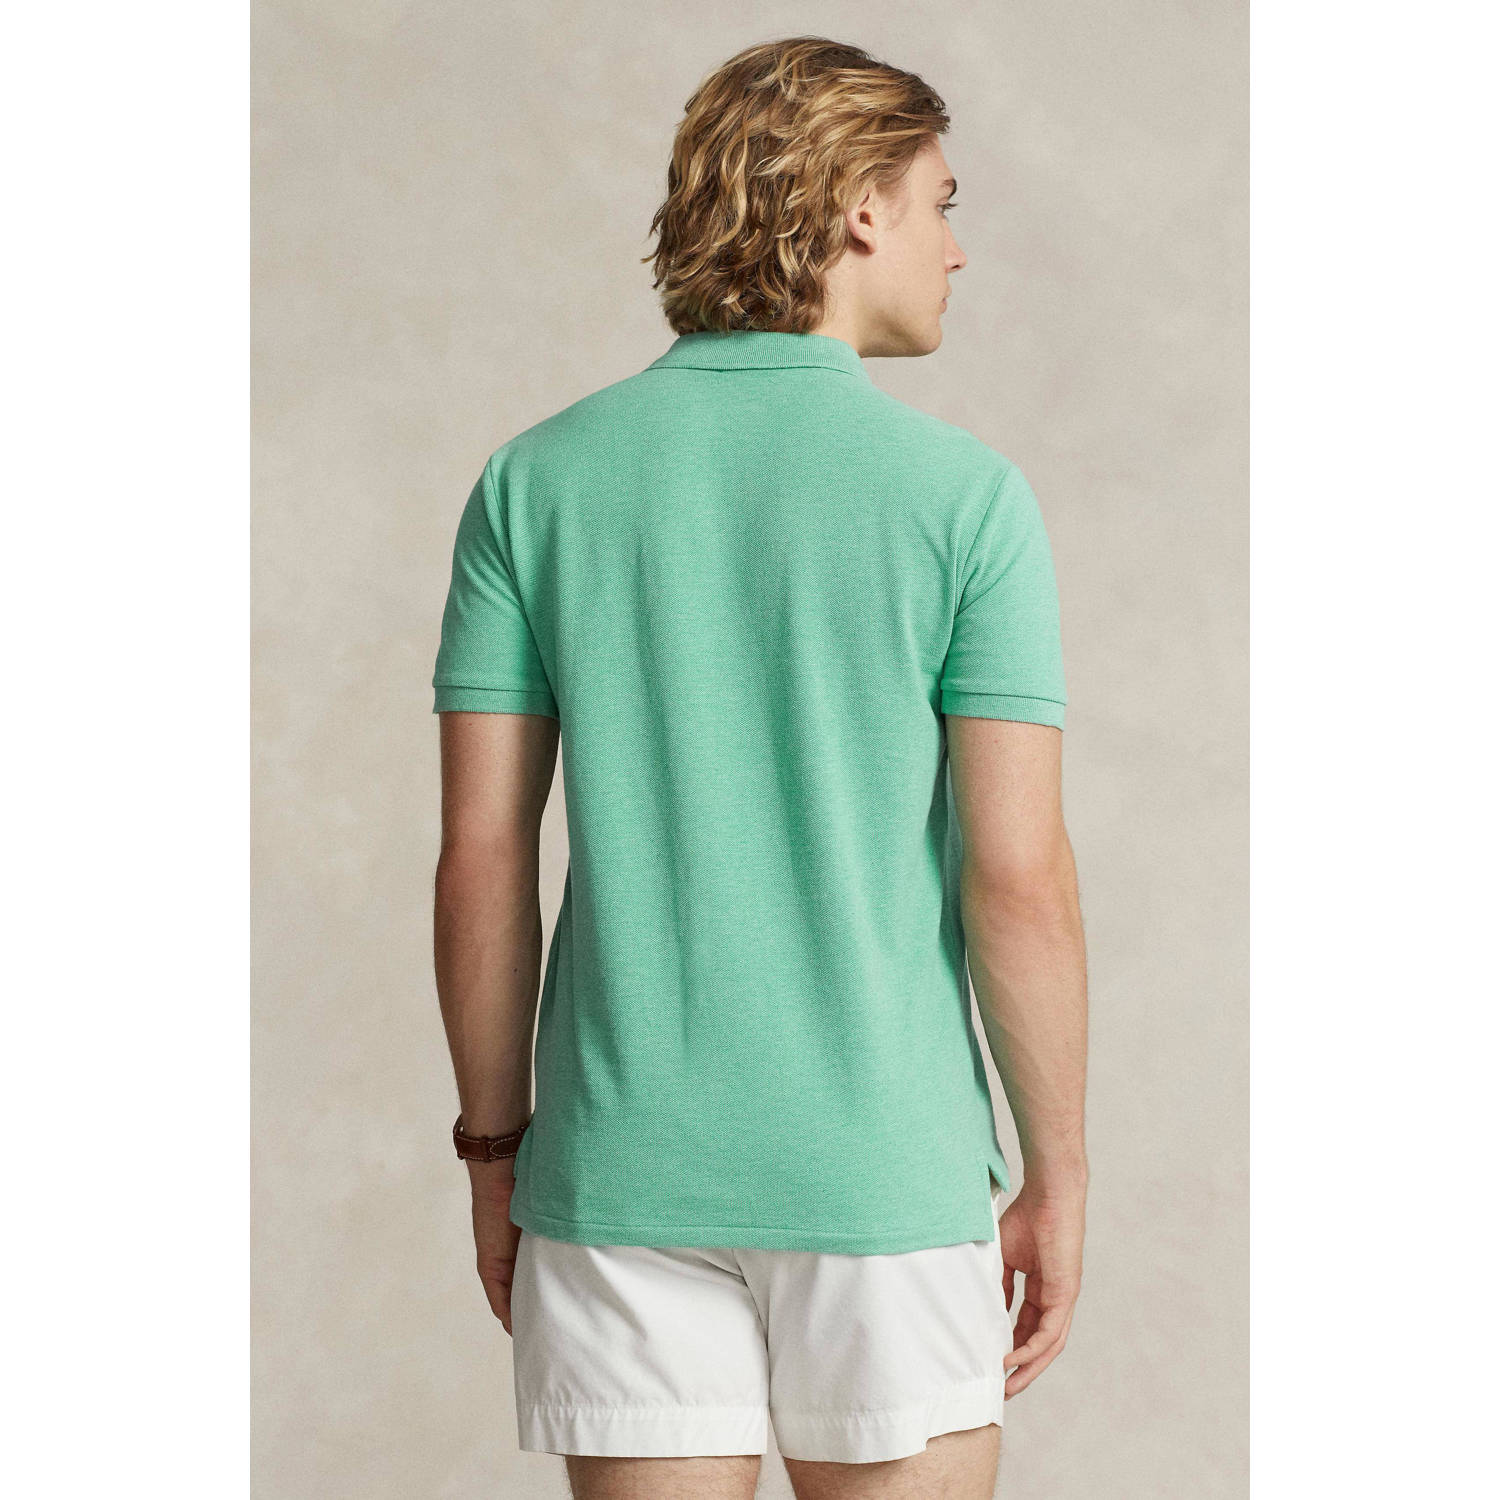 POLO Ralph Lauren slim fit polo met logo green